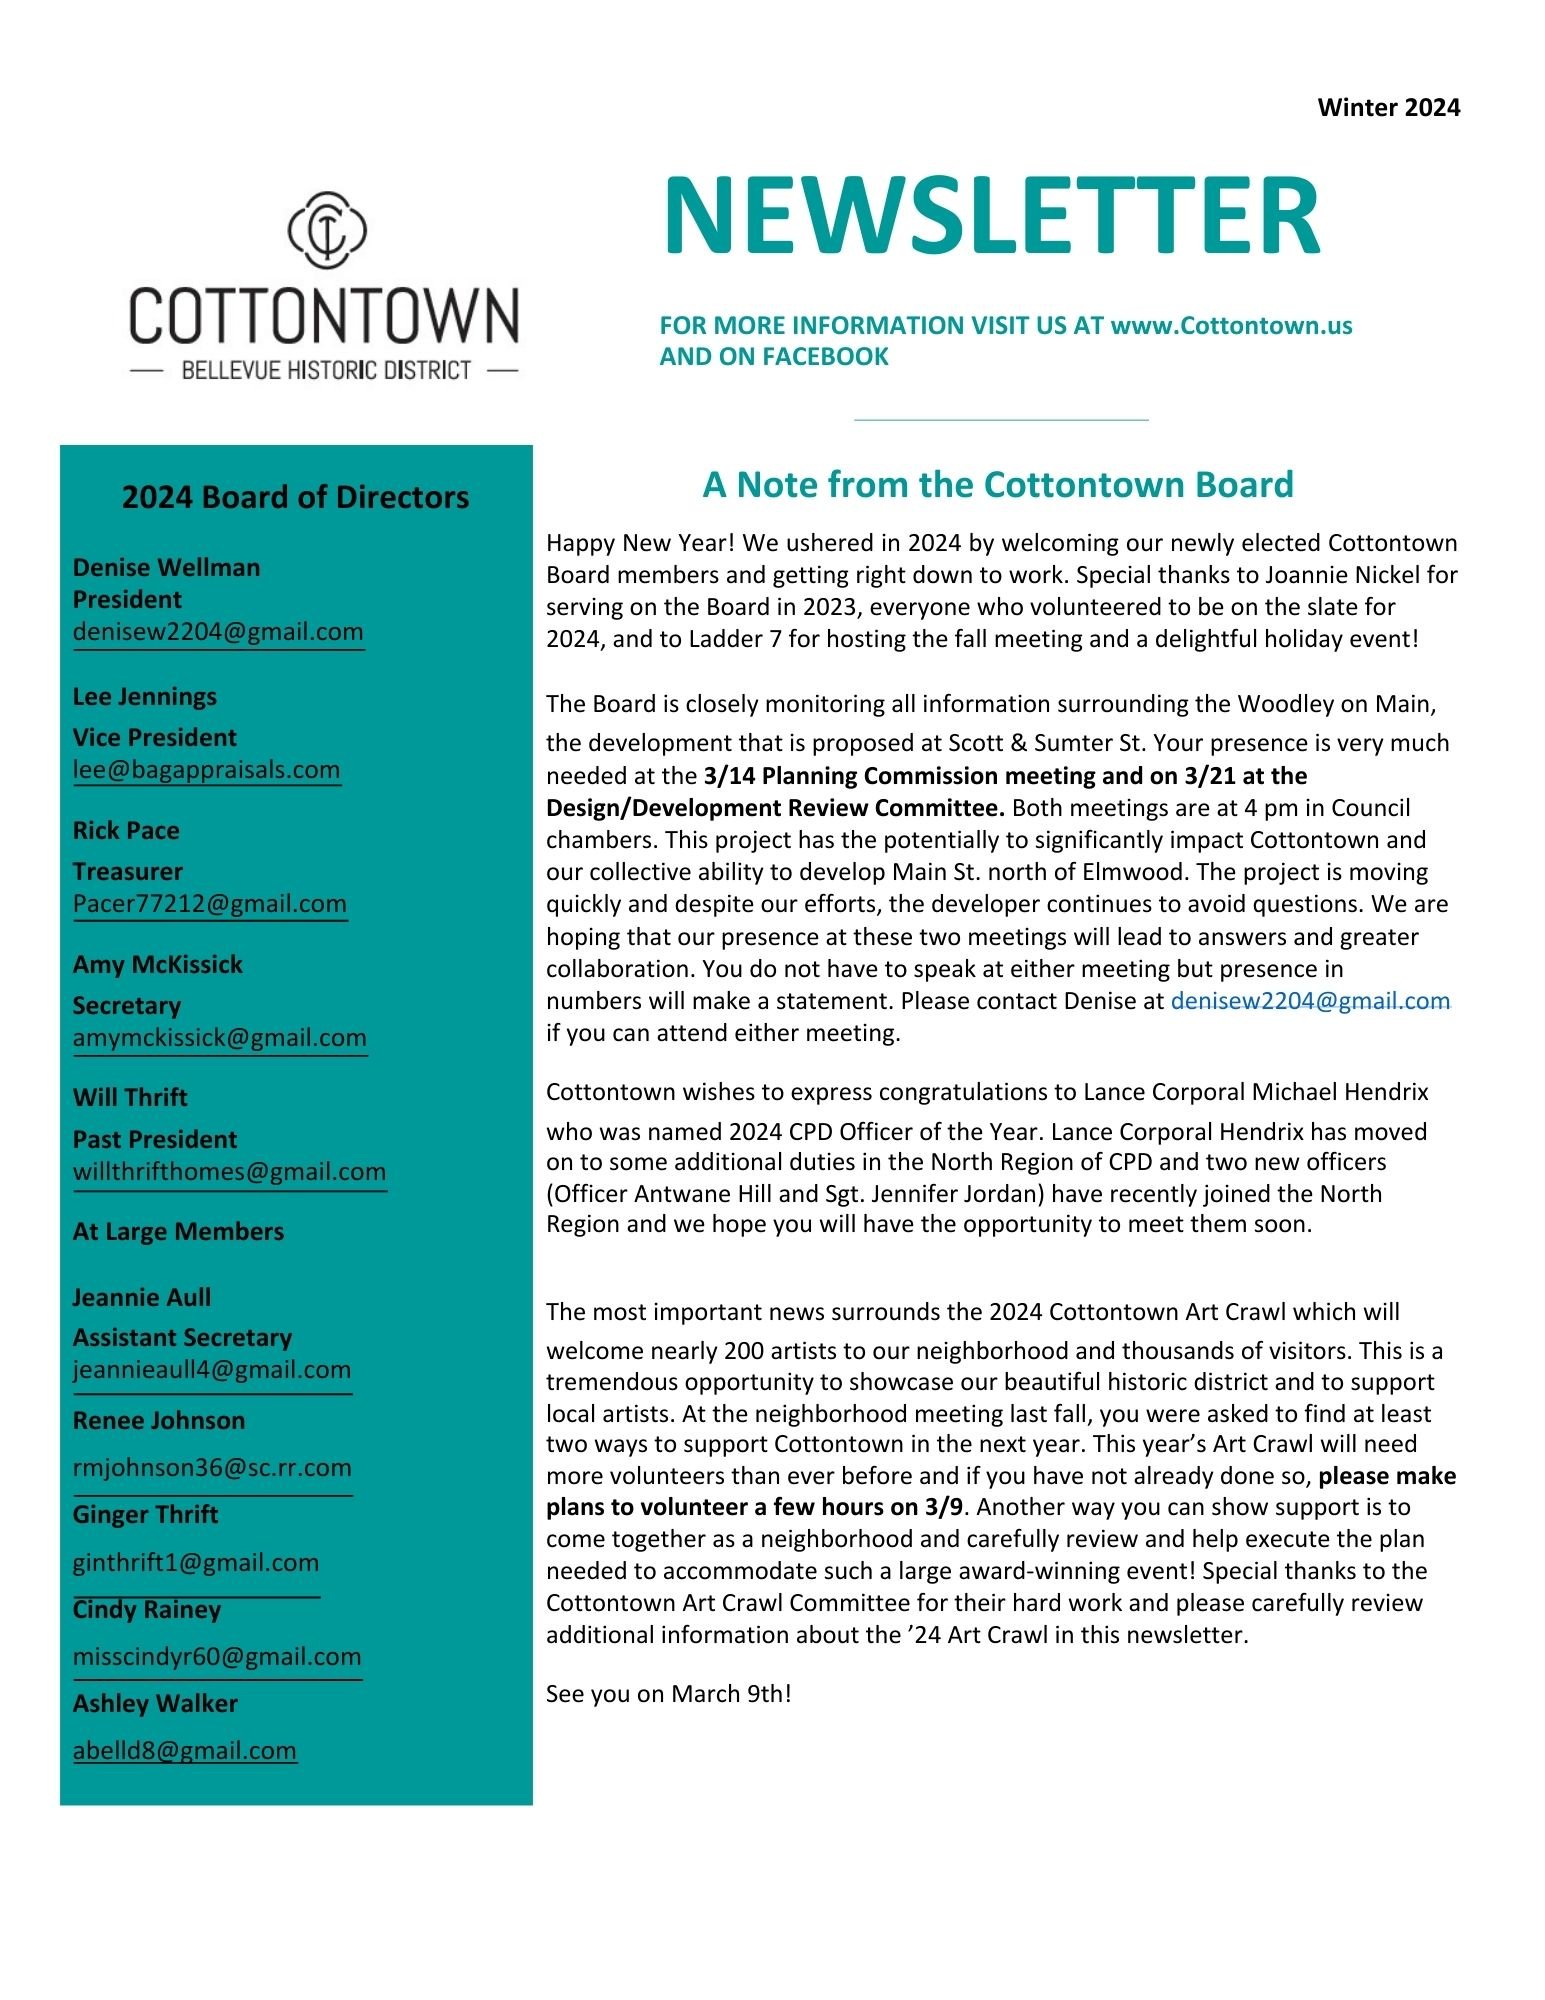 Cottontown Winter 2024 Newsletter.pdf (1).jpg